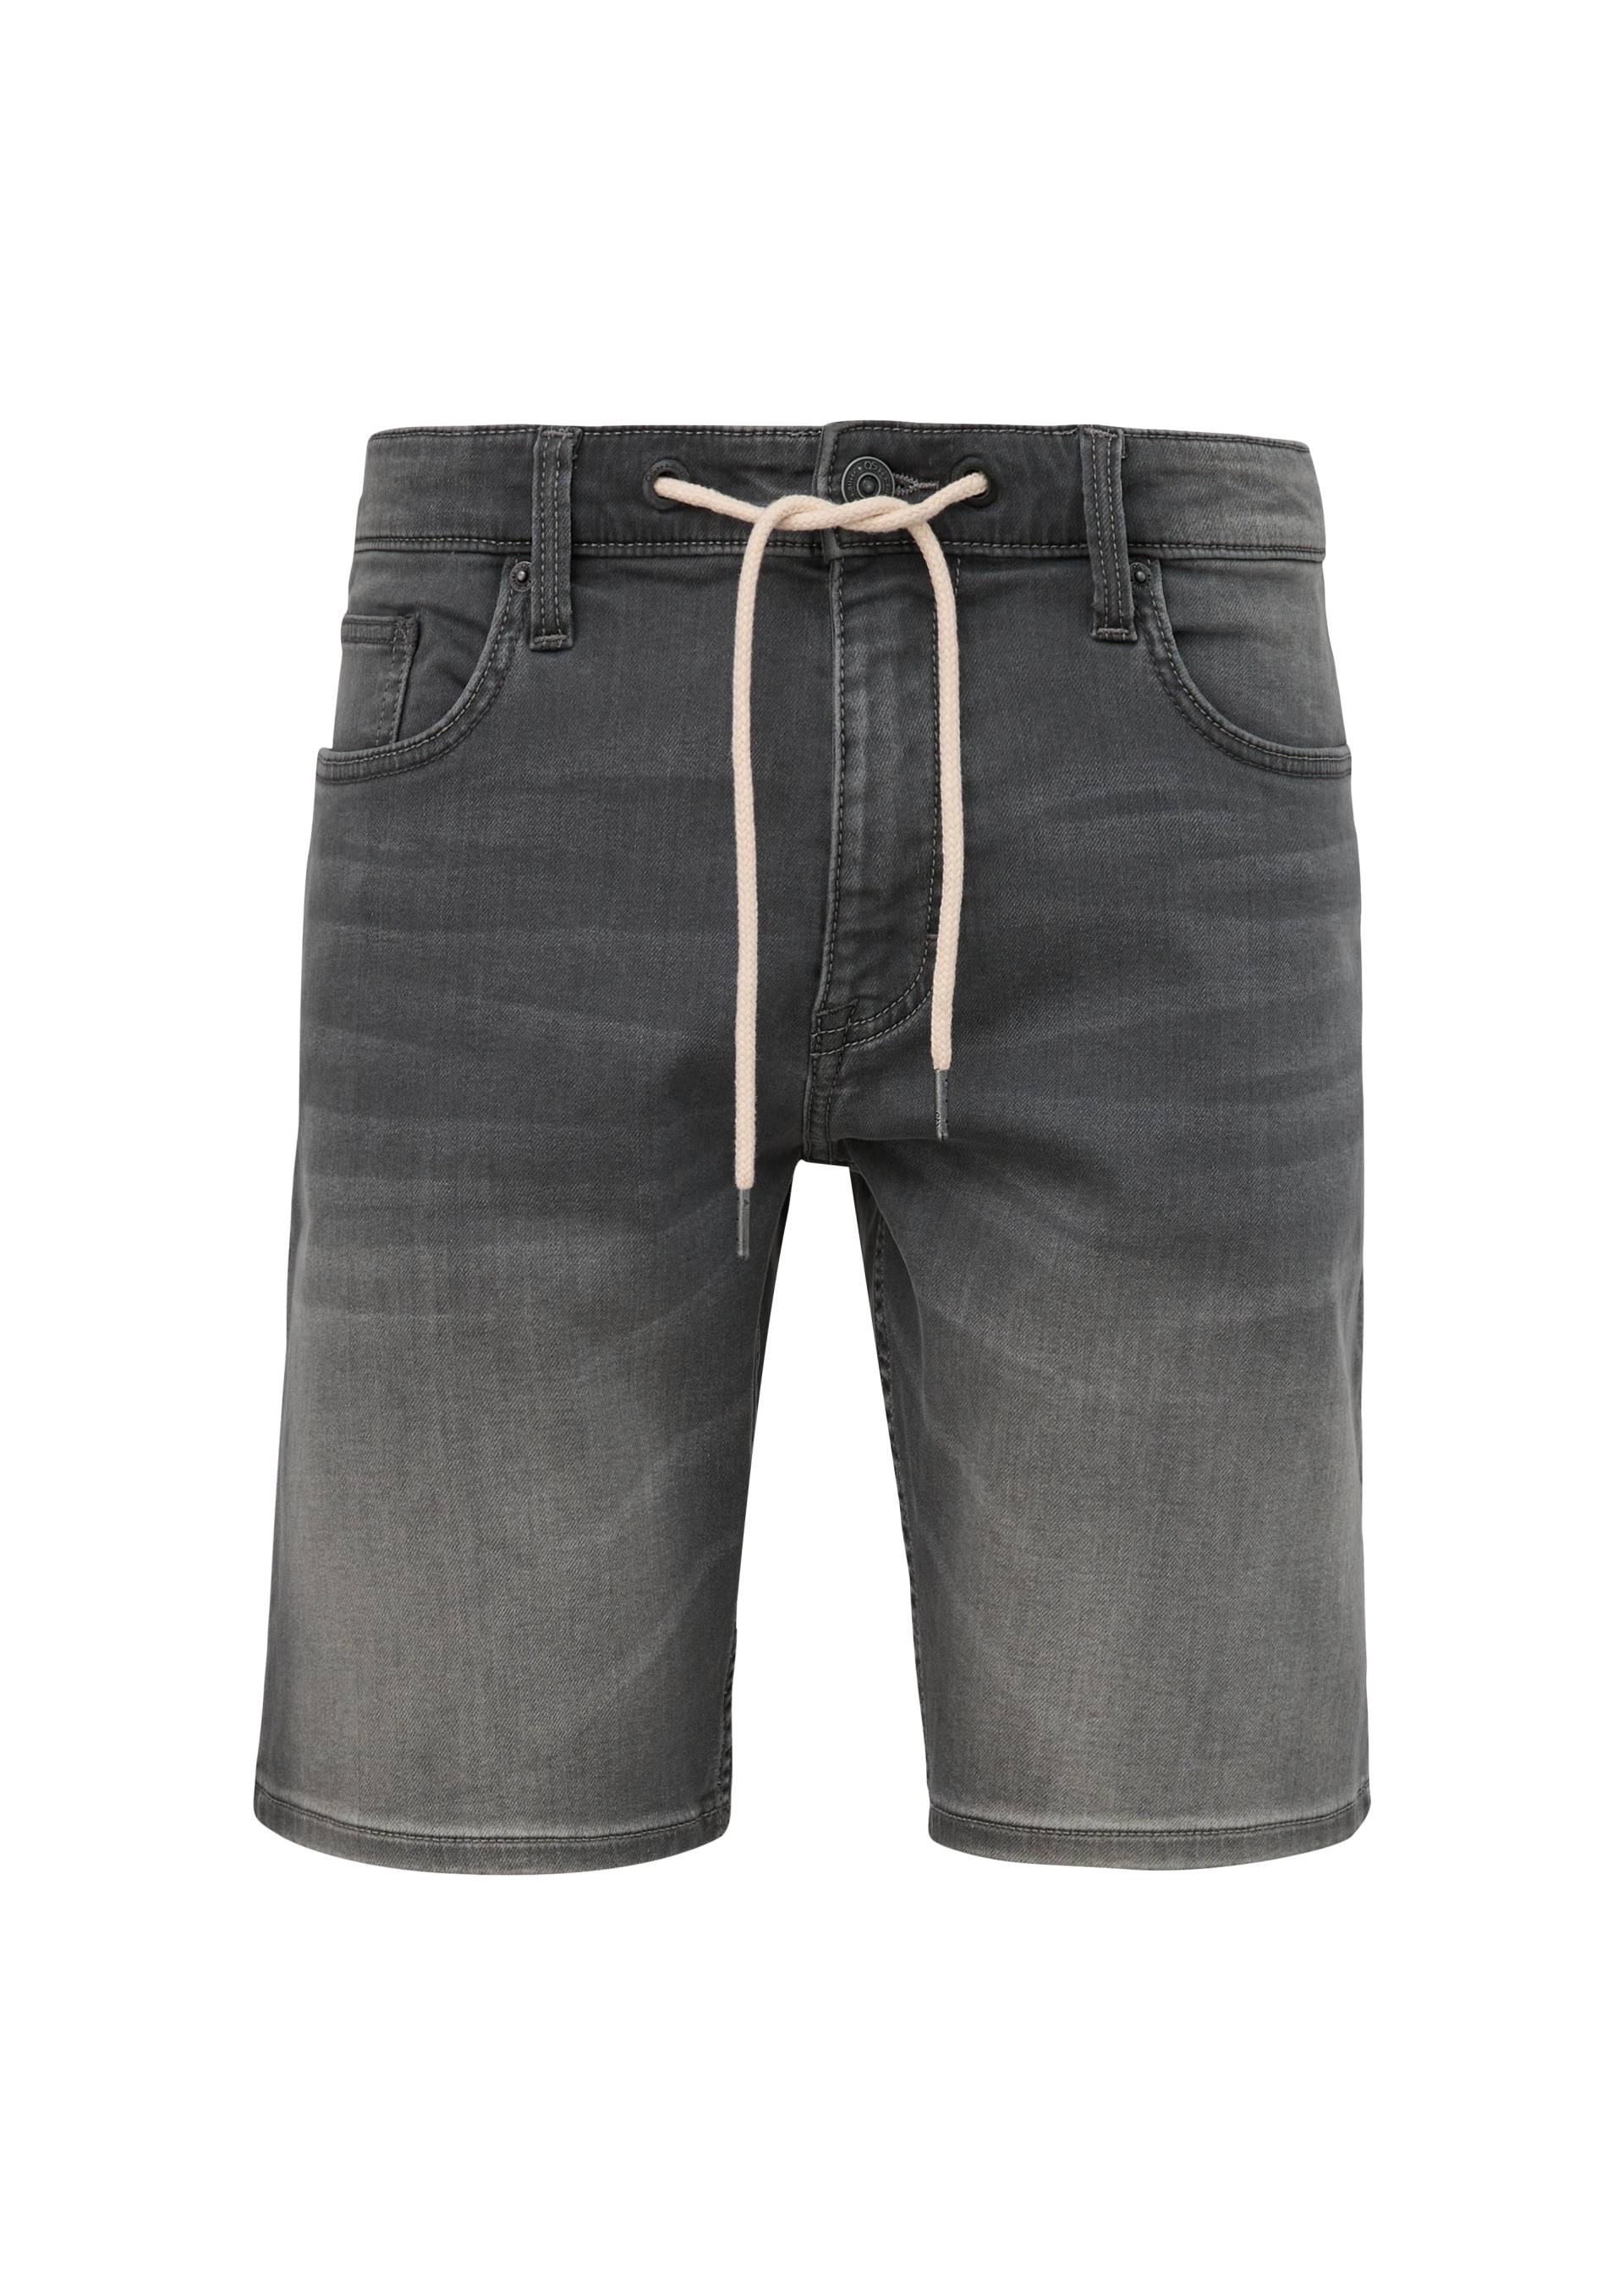 QS - Jeans-Shorts John / Regular Fit / Mid Rise / Straight Leg, Herren, grau von QS